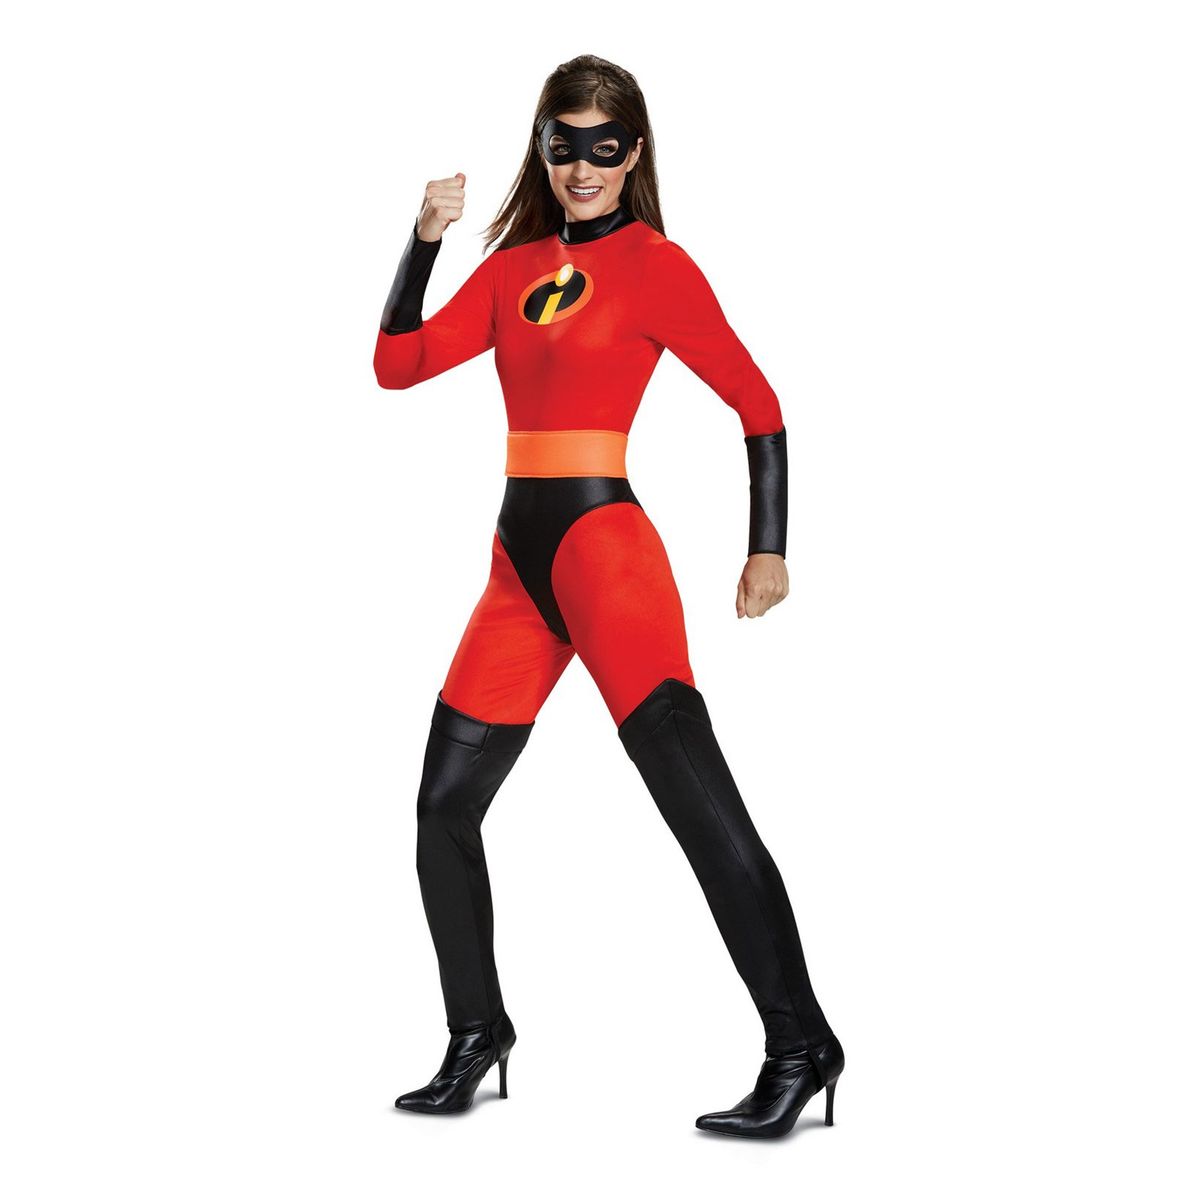 RDY 送料無料 ミセス インクレディブル クラシック インクレディブル ファミリー ハロウィン コスプレ コスチューム 大人 衣装 楽天海外通販 Mrs. Incredible Classic Costume - The Incredibles 2